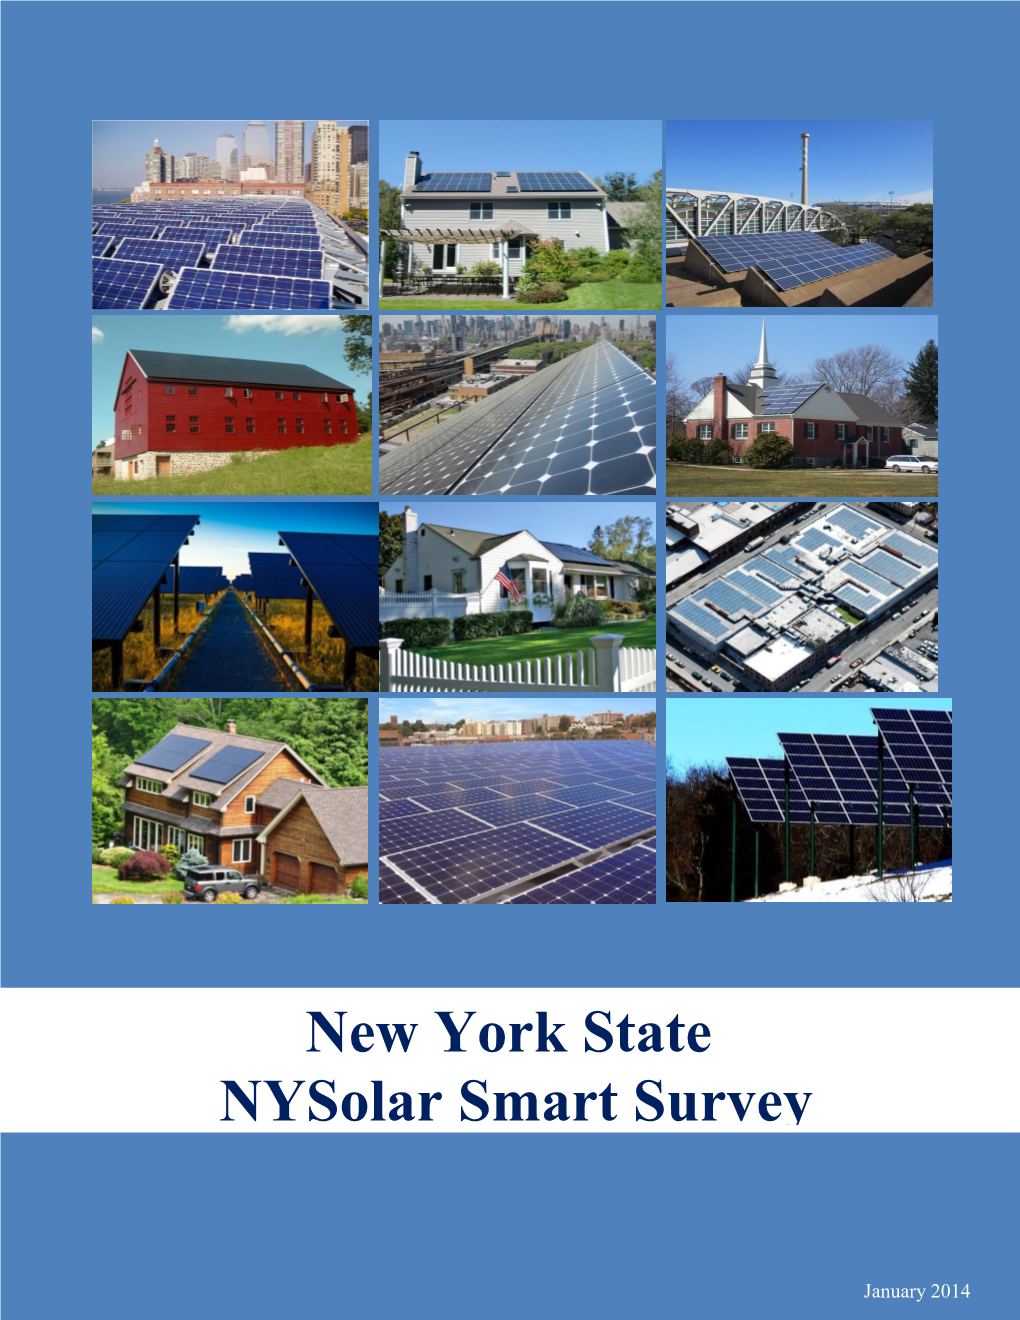 New York State Nysolar Smart Survey